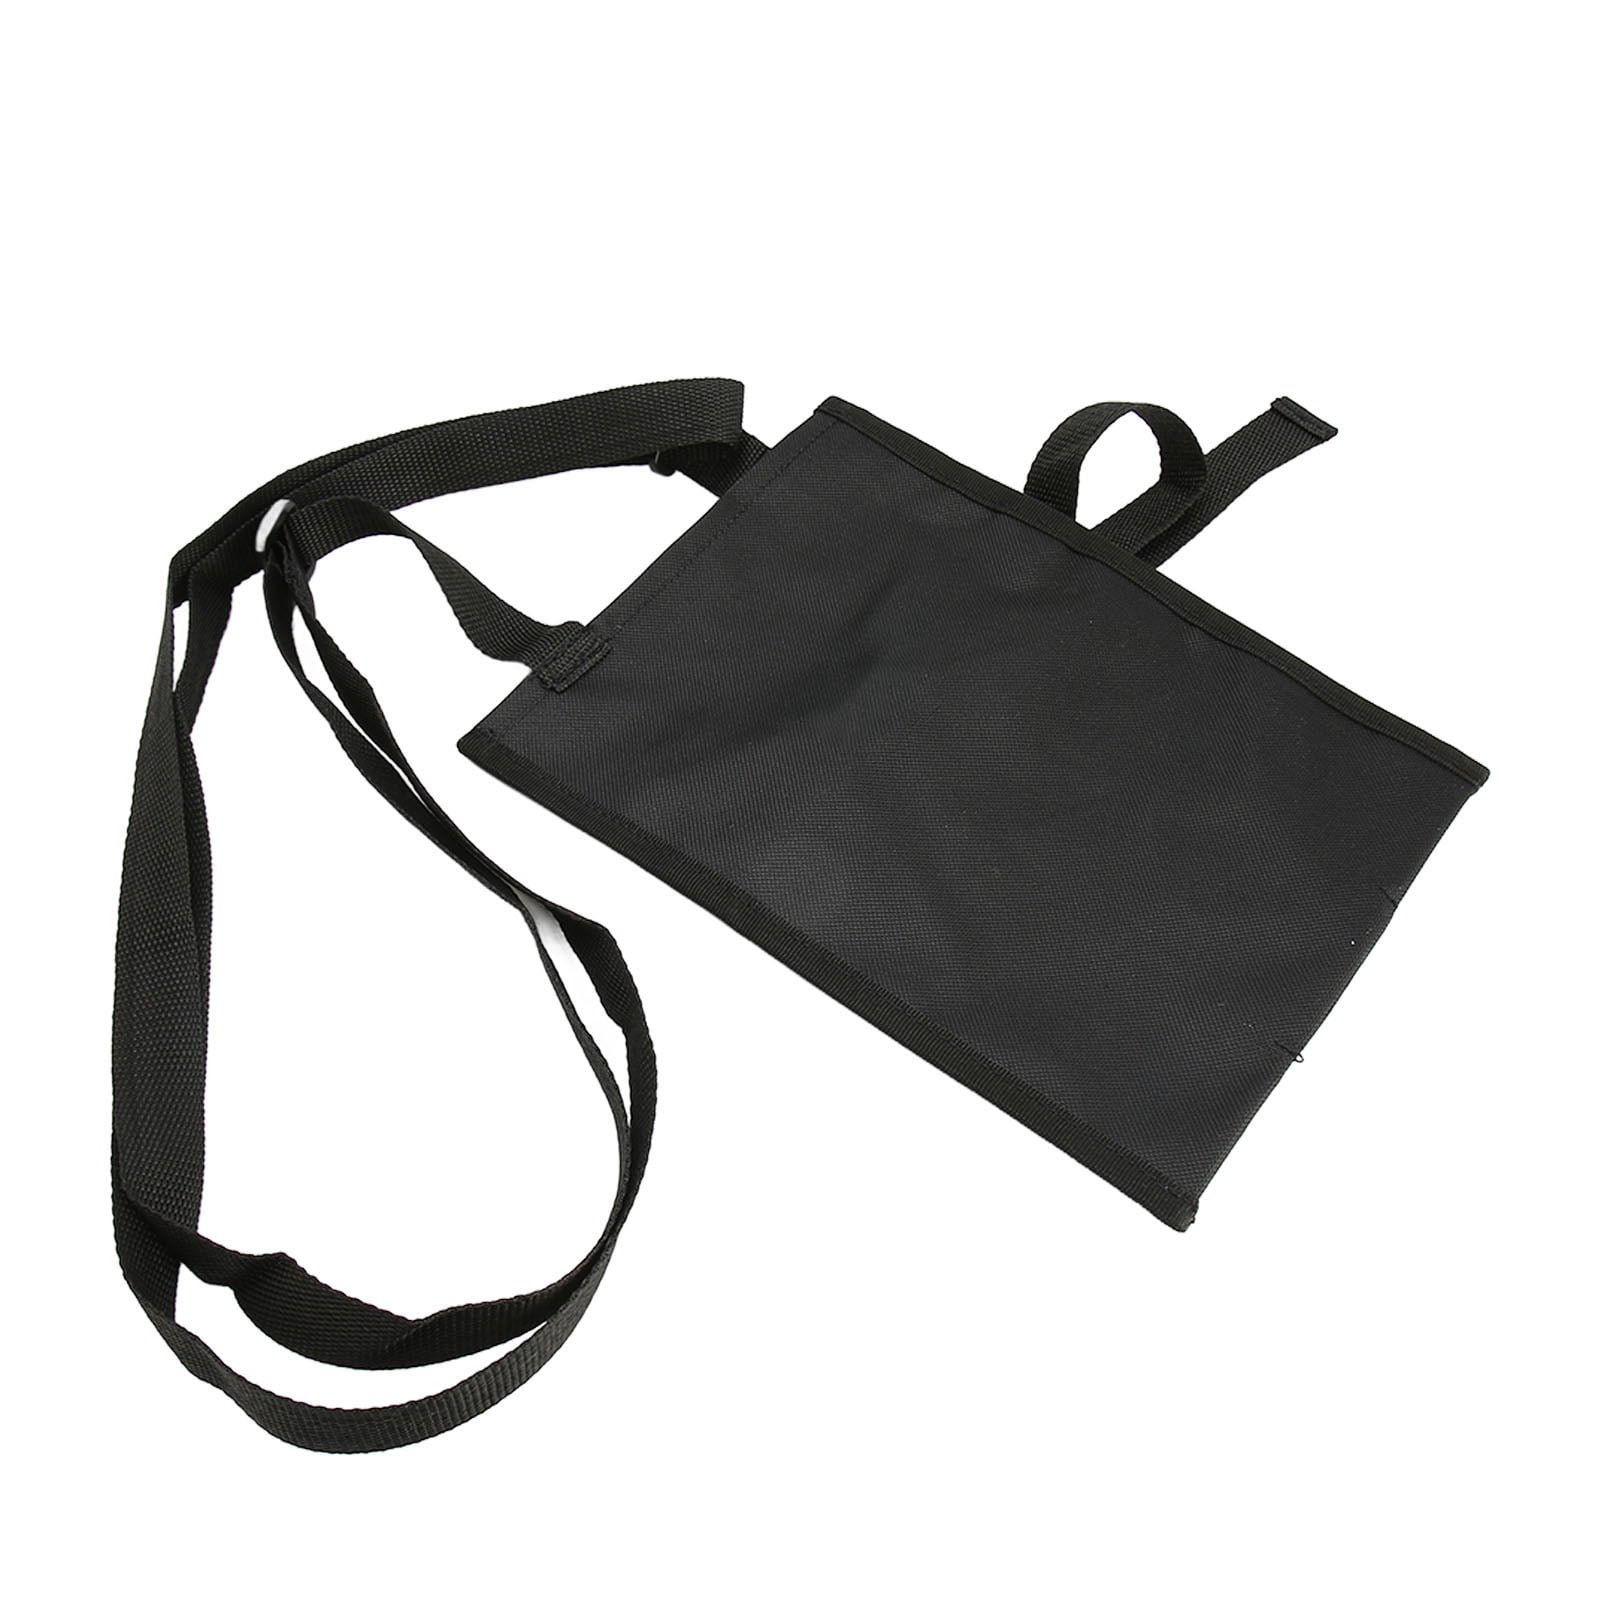 Urinary Drainage Bag Holder, Black Vinyl with Straps